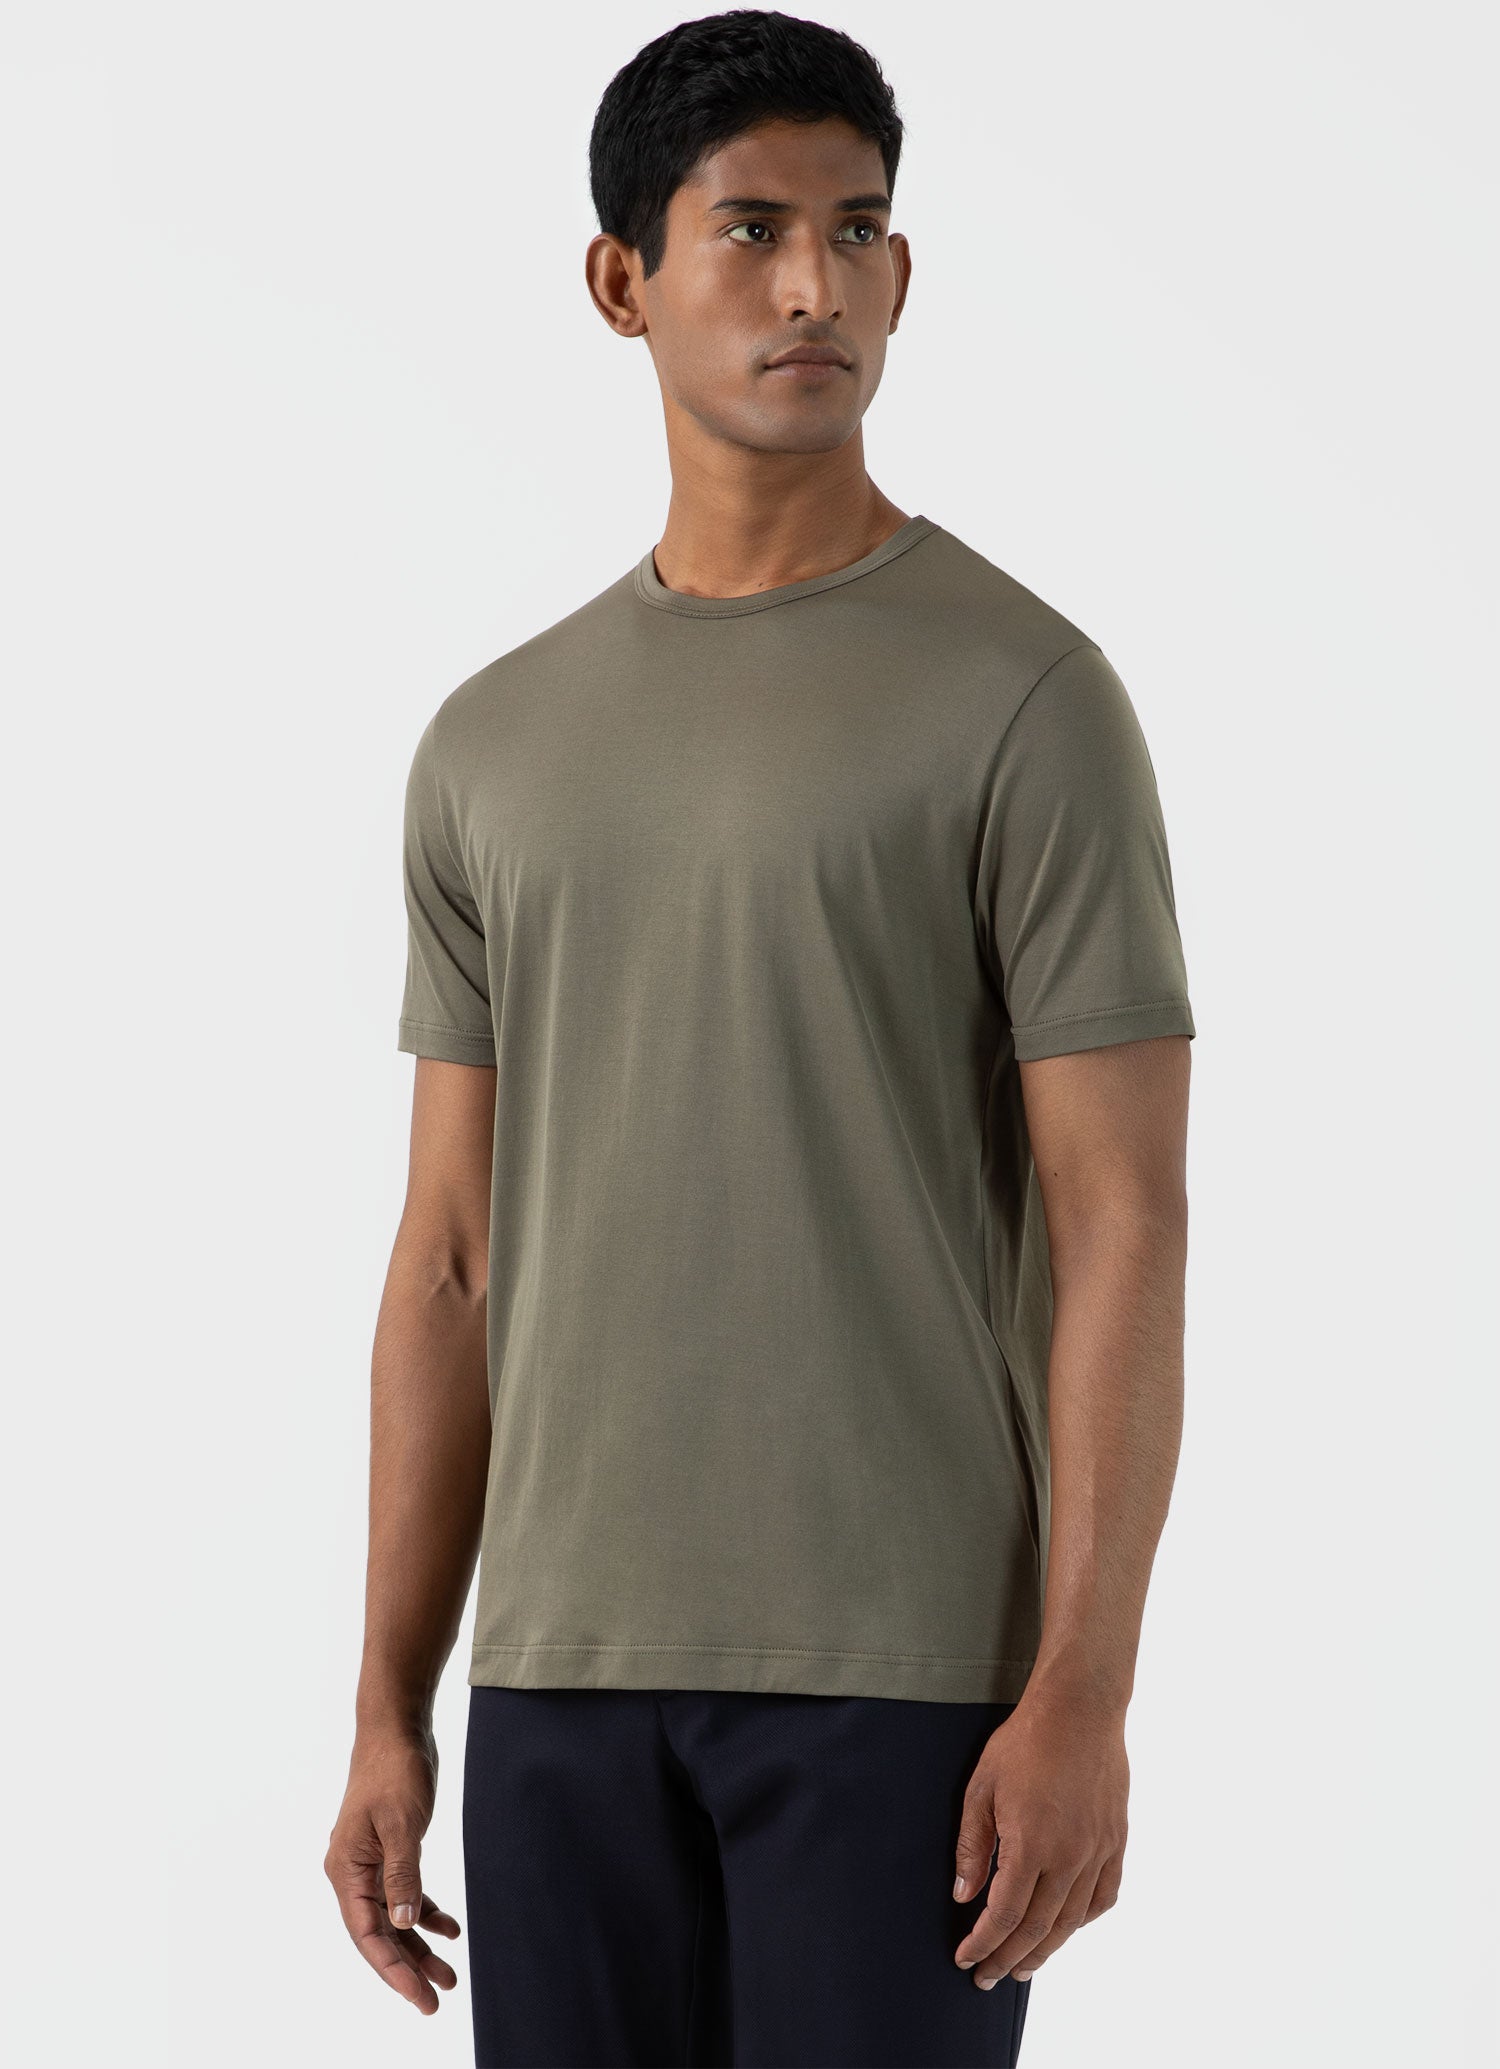 Men's Classic T-shirt in Dark Olive | Sunspel